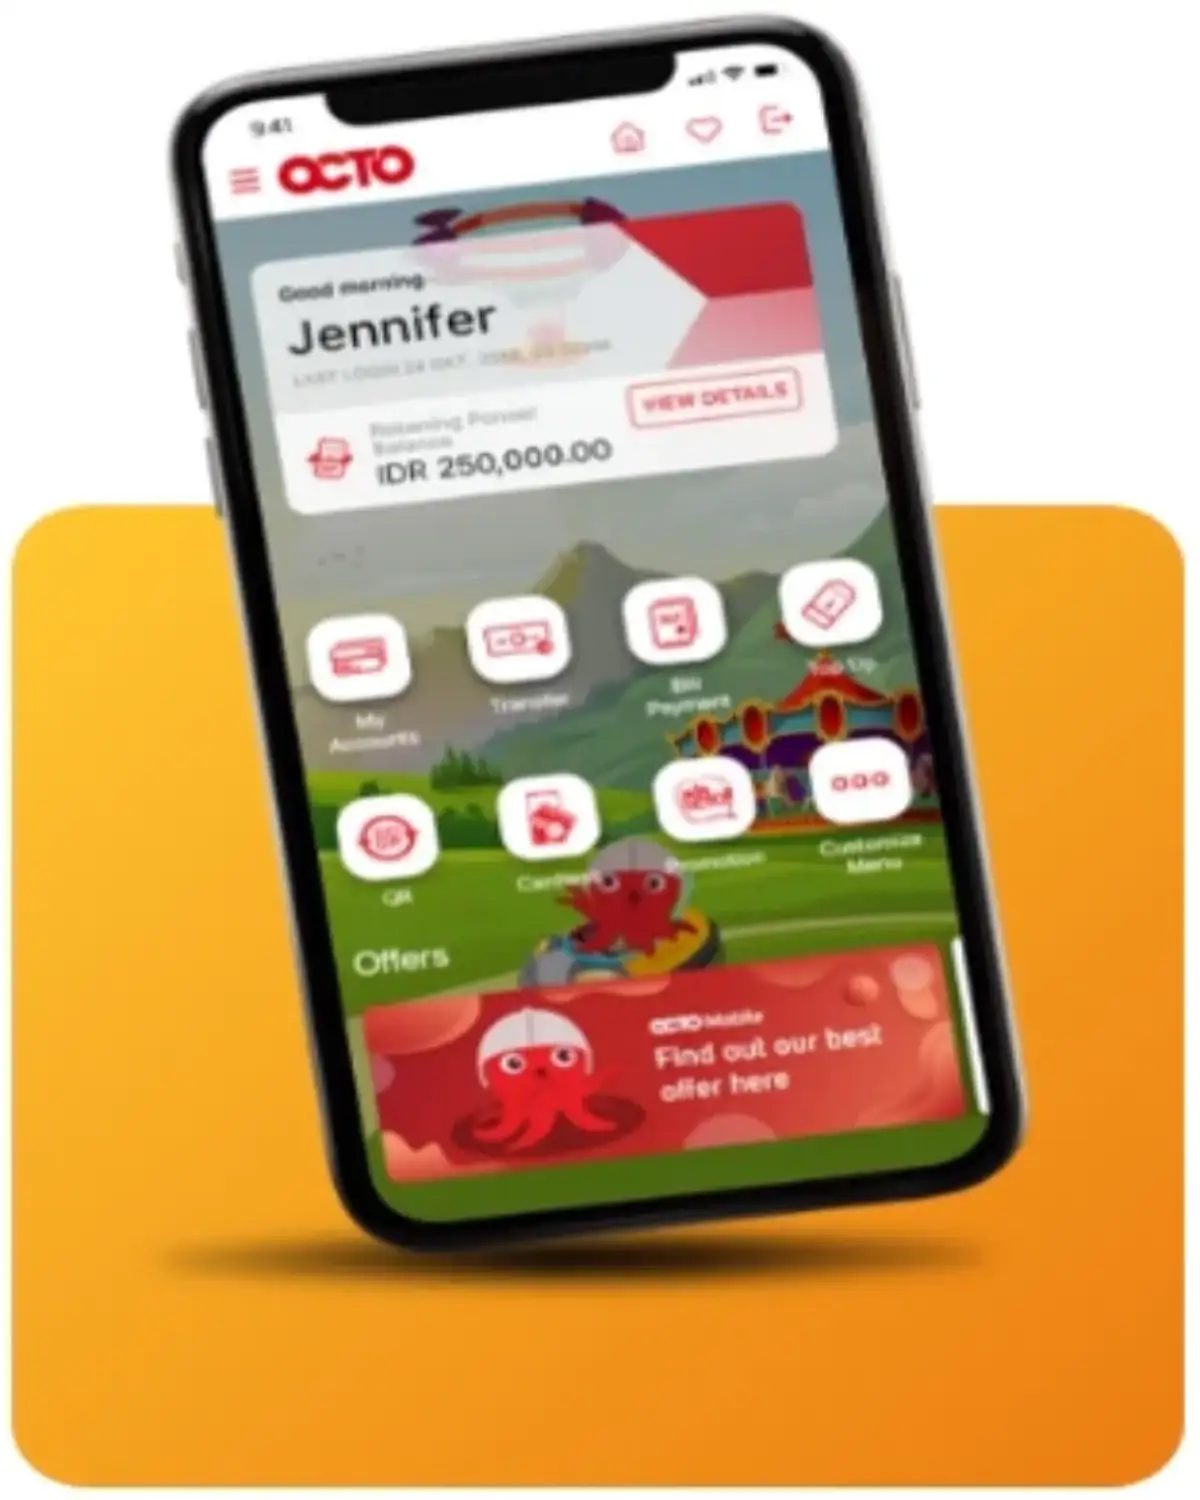 OCTO Clicks merupakan salah satu layanan digital dari CIMB Niaga